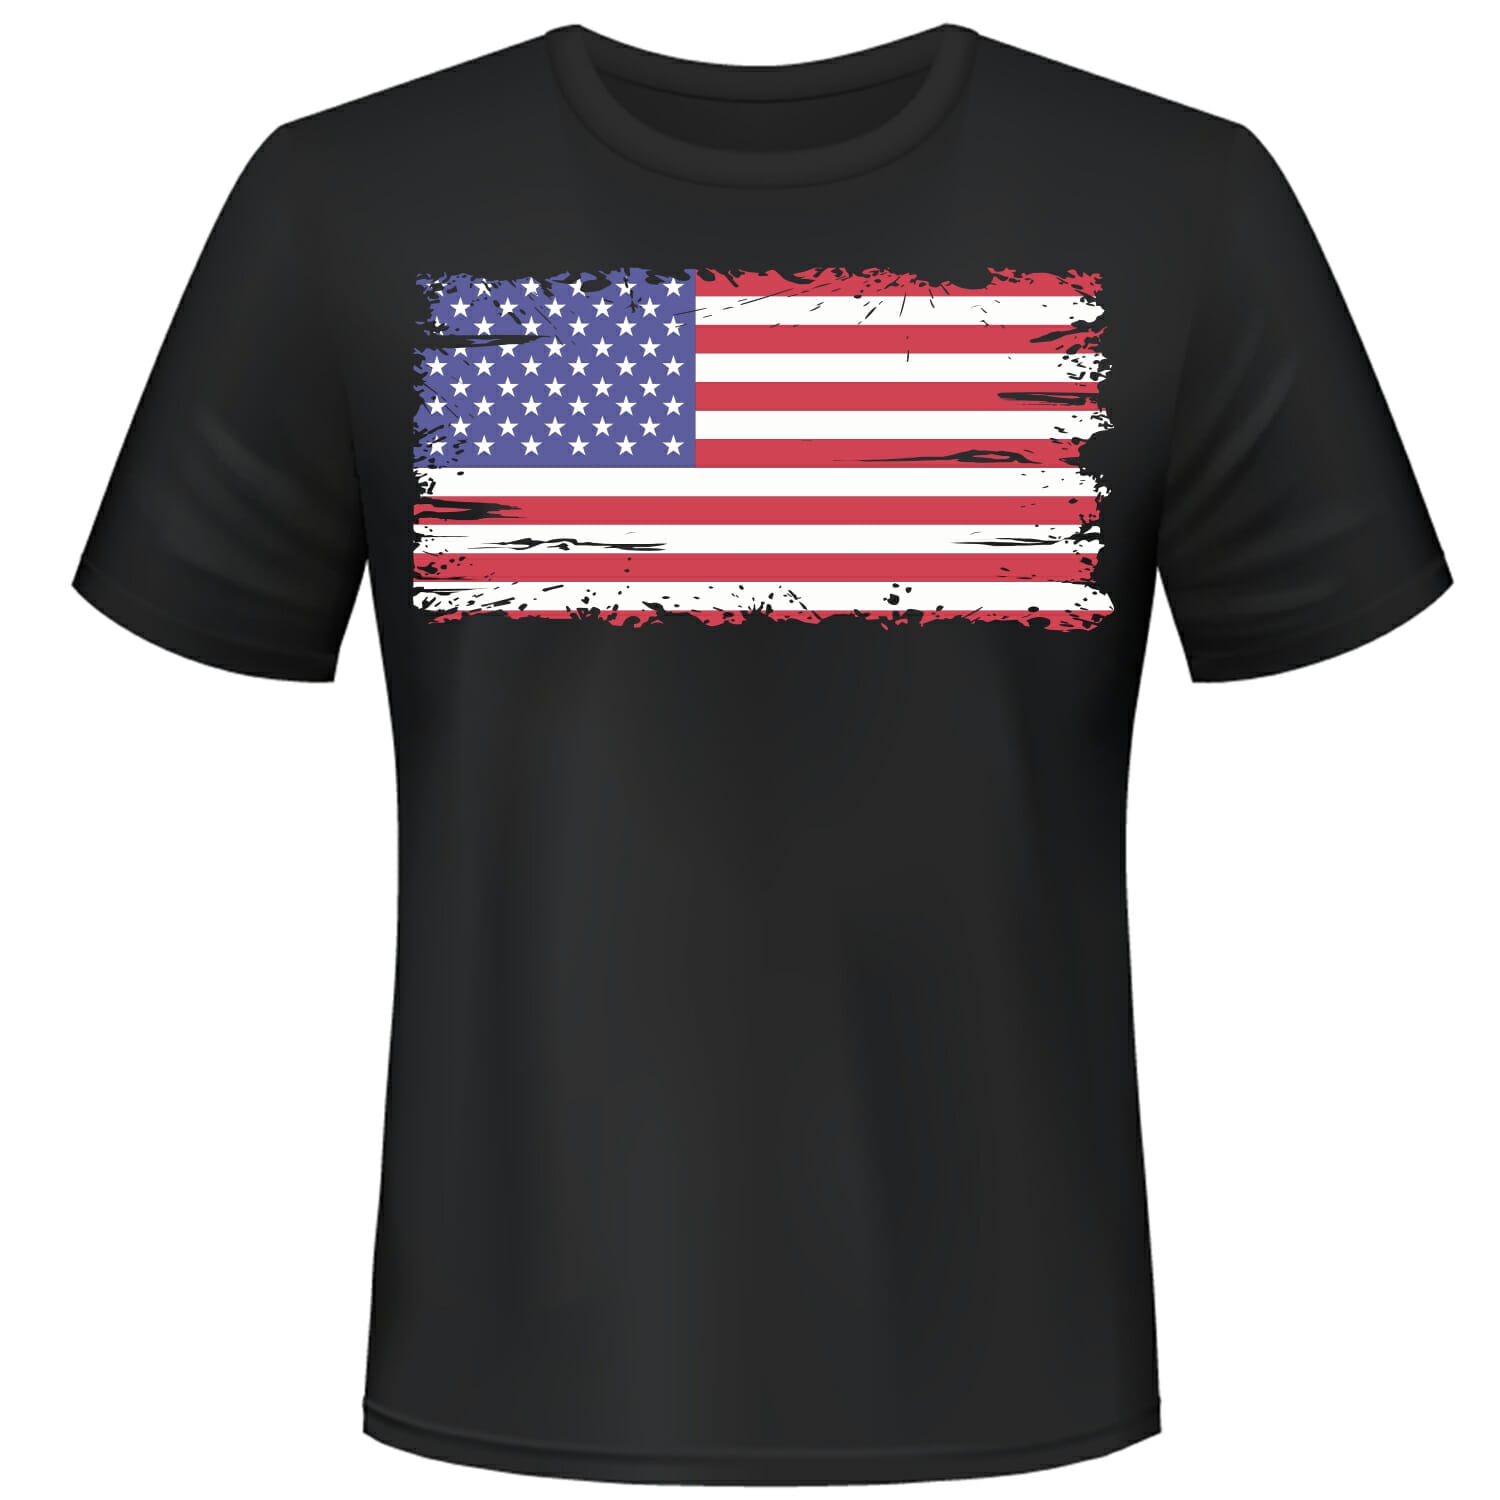 American flag with grunge effect tshirt design